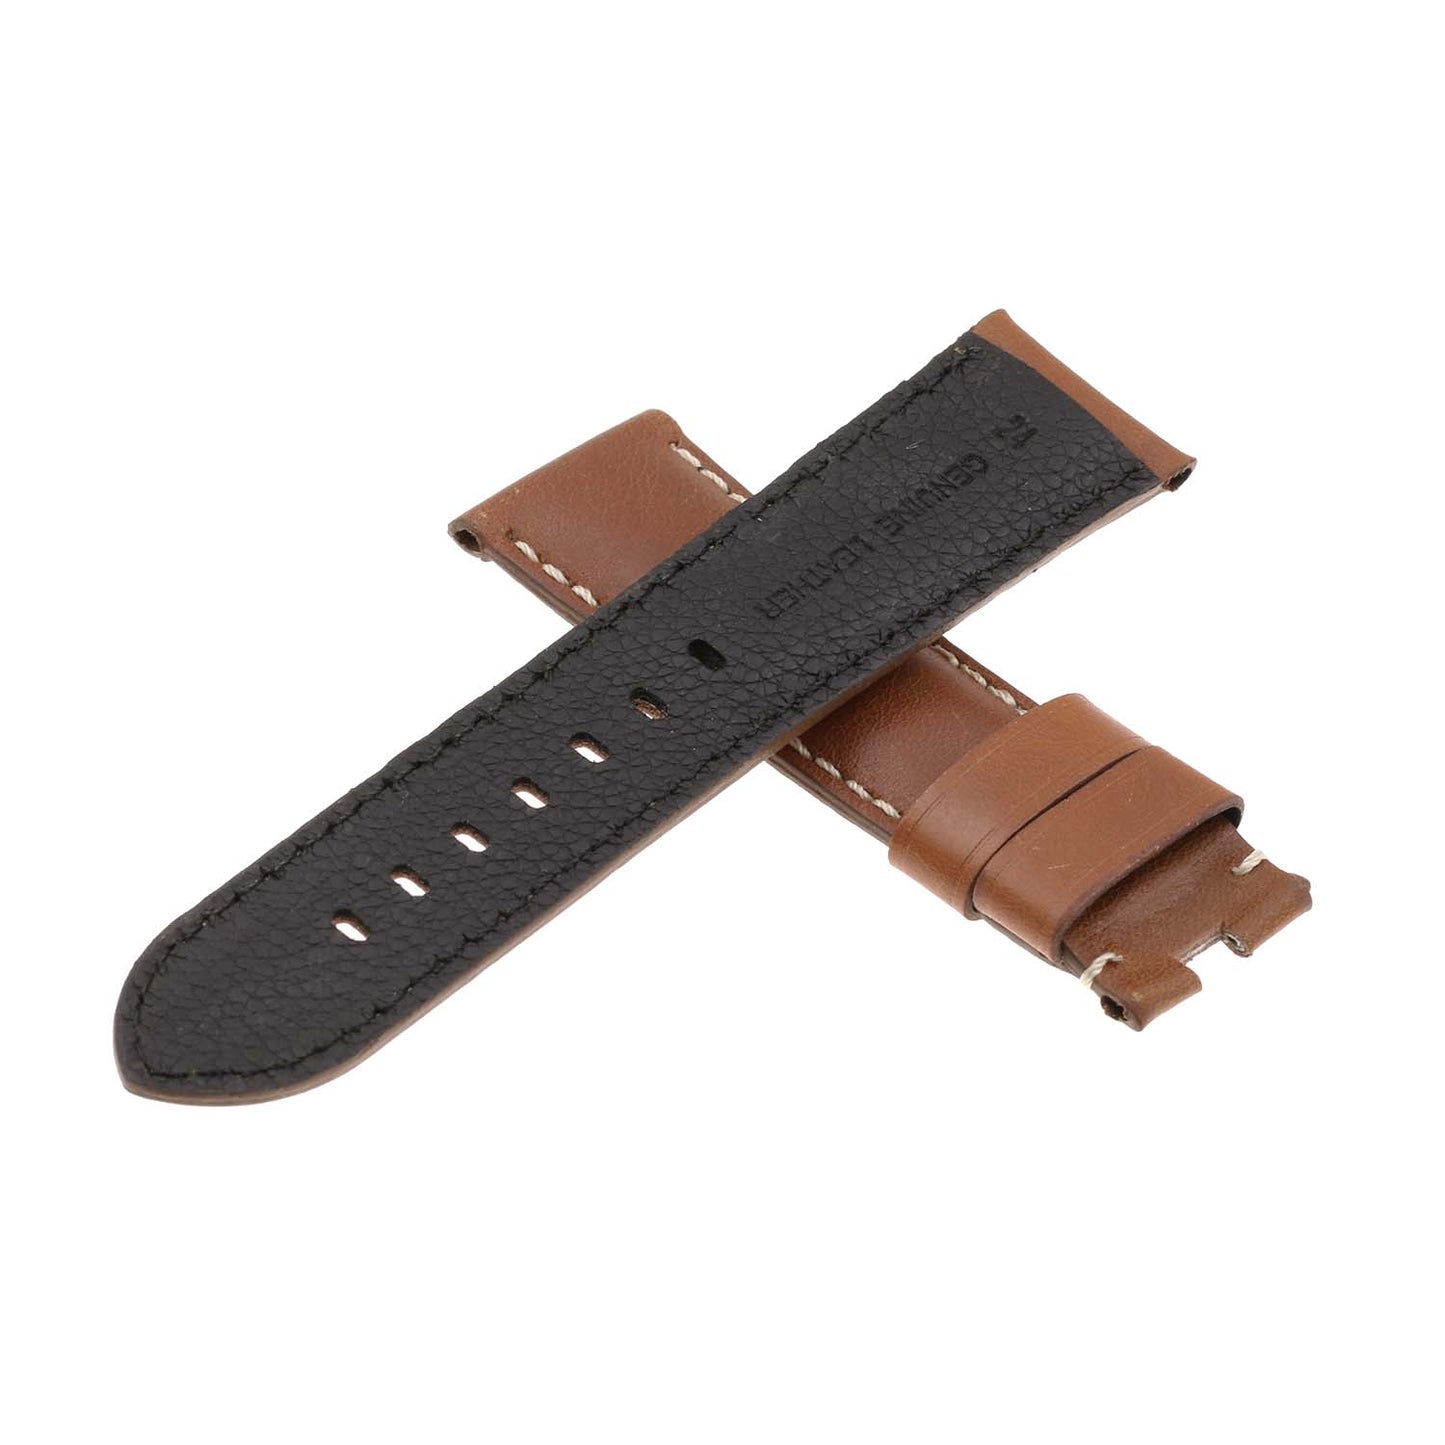 DASSARI Smooth Leather Strap w/ Deployant Clasp (Standard, Long) for Samsung Galaxy Watch 3 (45mm) Tan